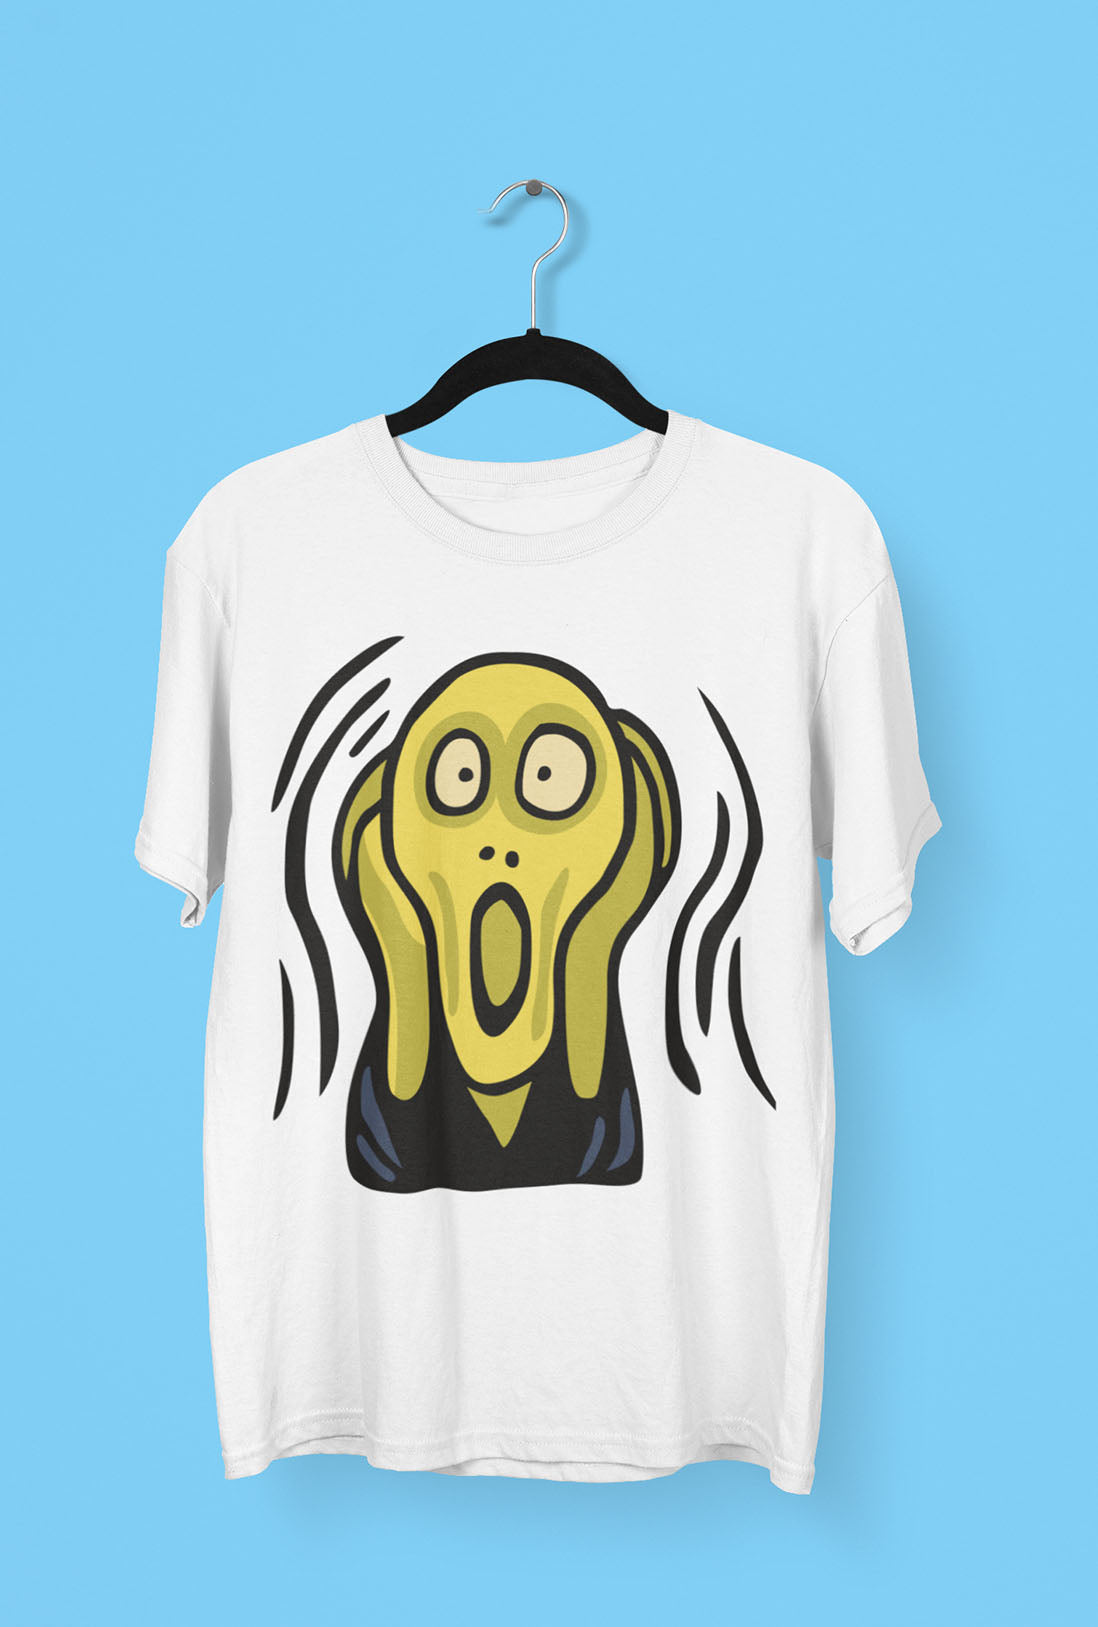 The Scream Head Men's Cotton T-Shirt